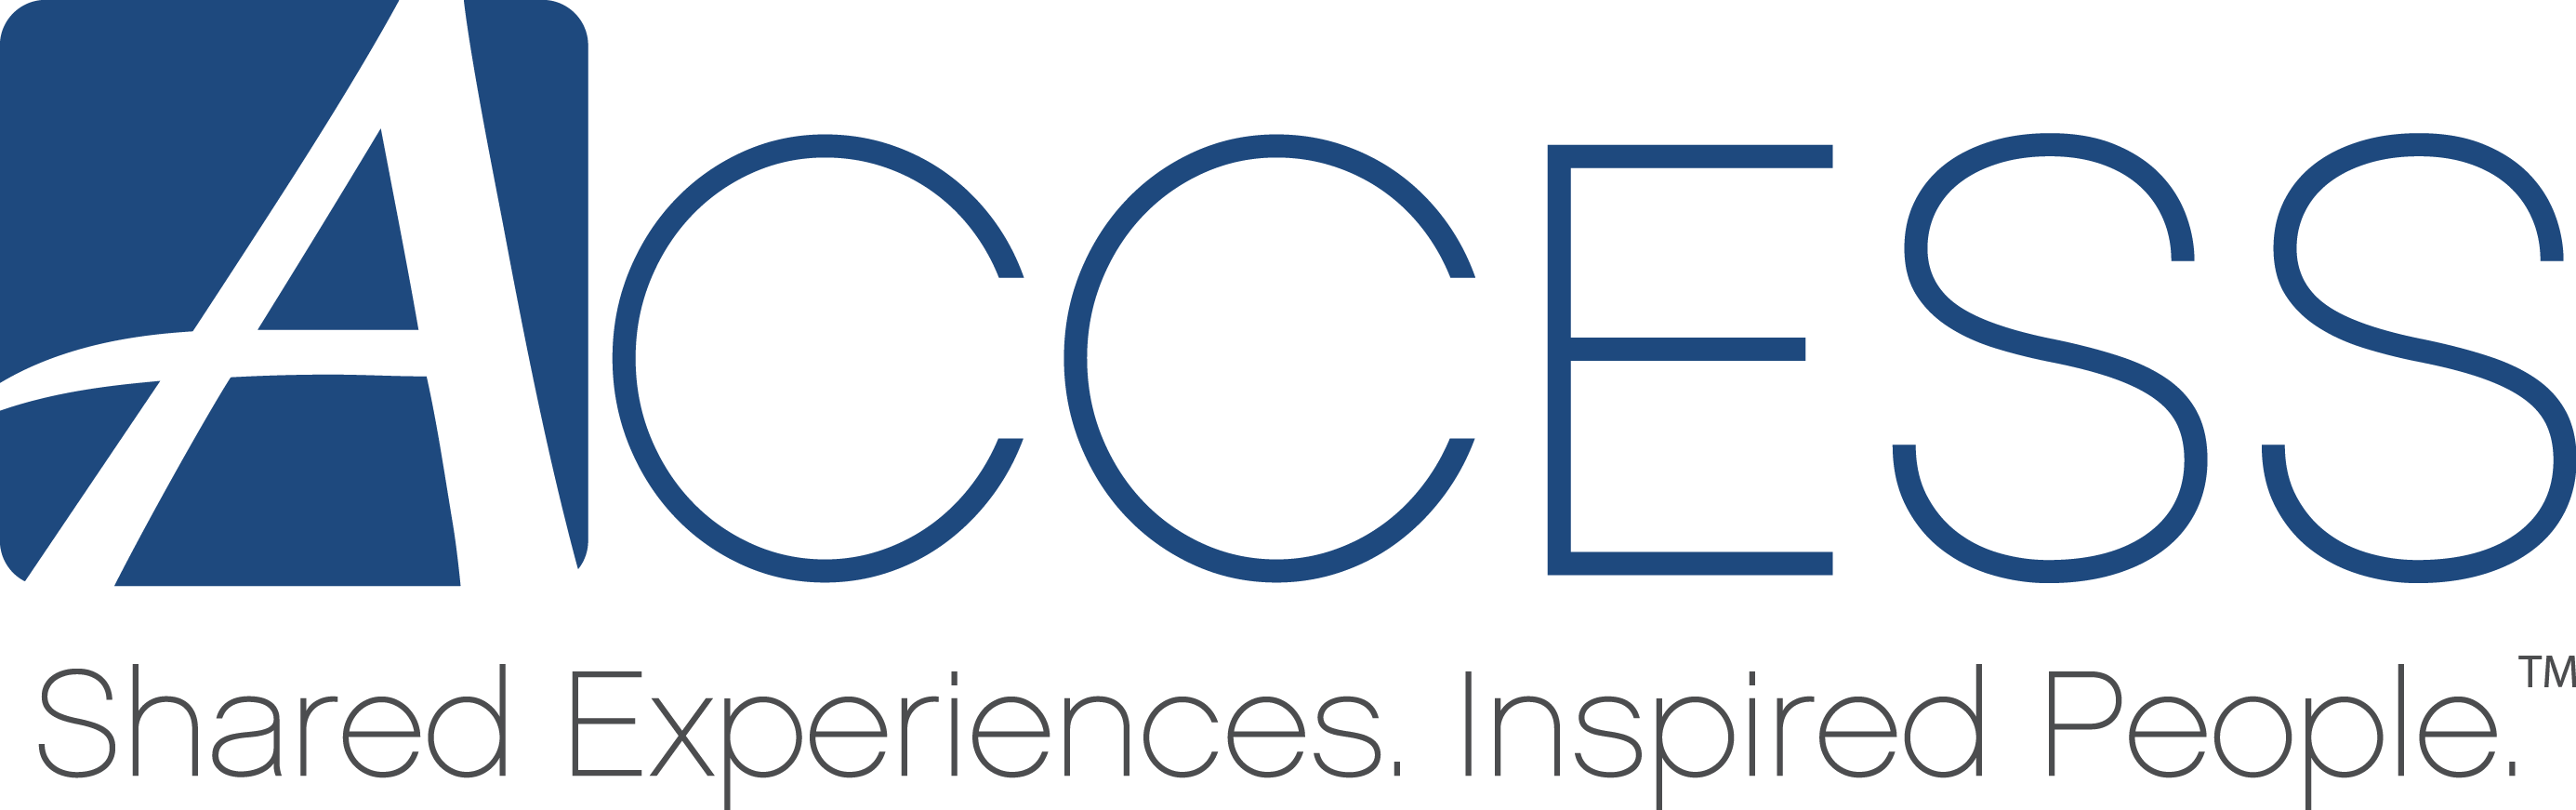 Access people. Логотип аксесс. WAVEACCESS лого. Destination services logo. Client logo.